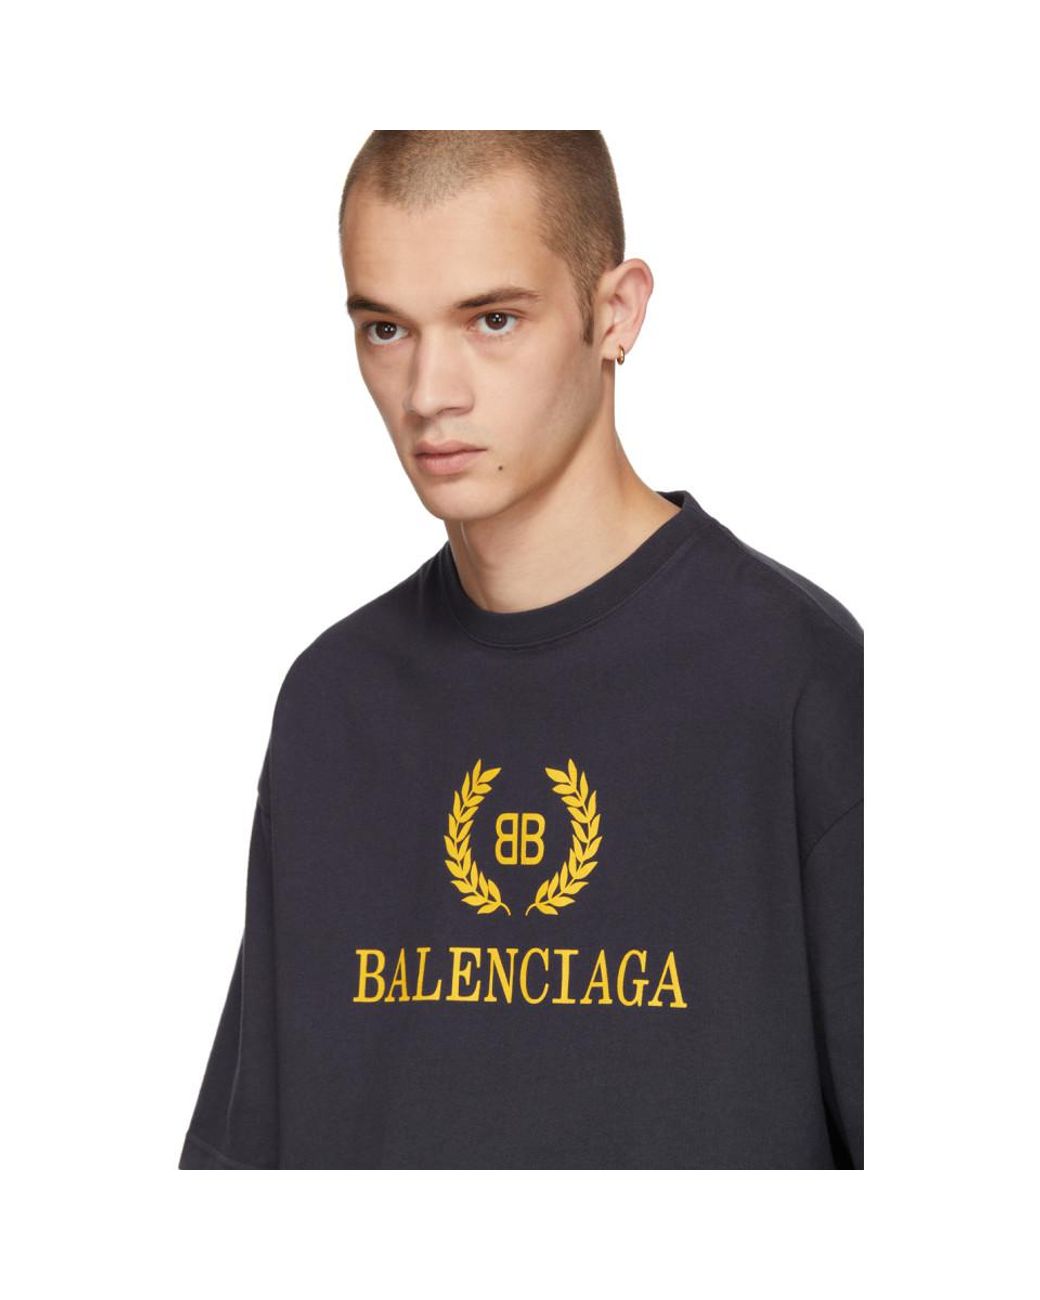 Balenciaga Copyright Tshirt Blue  Synergy Sourcing